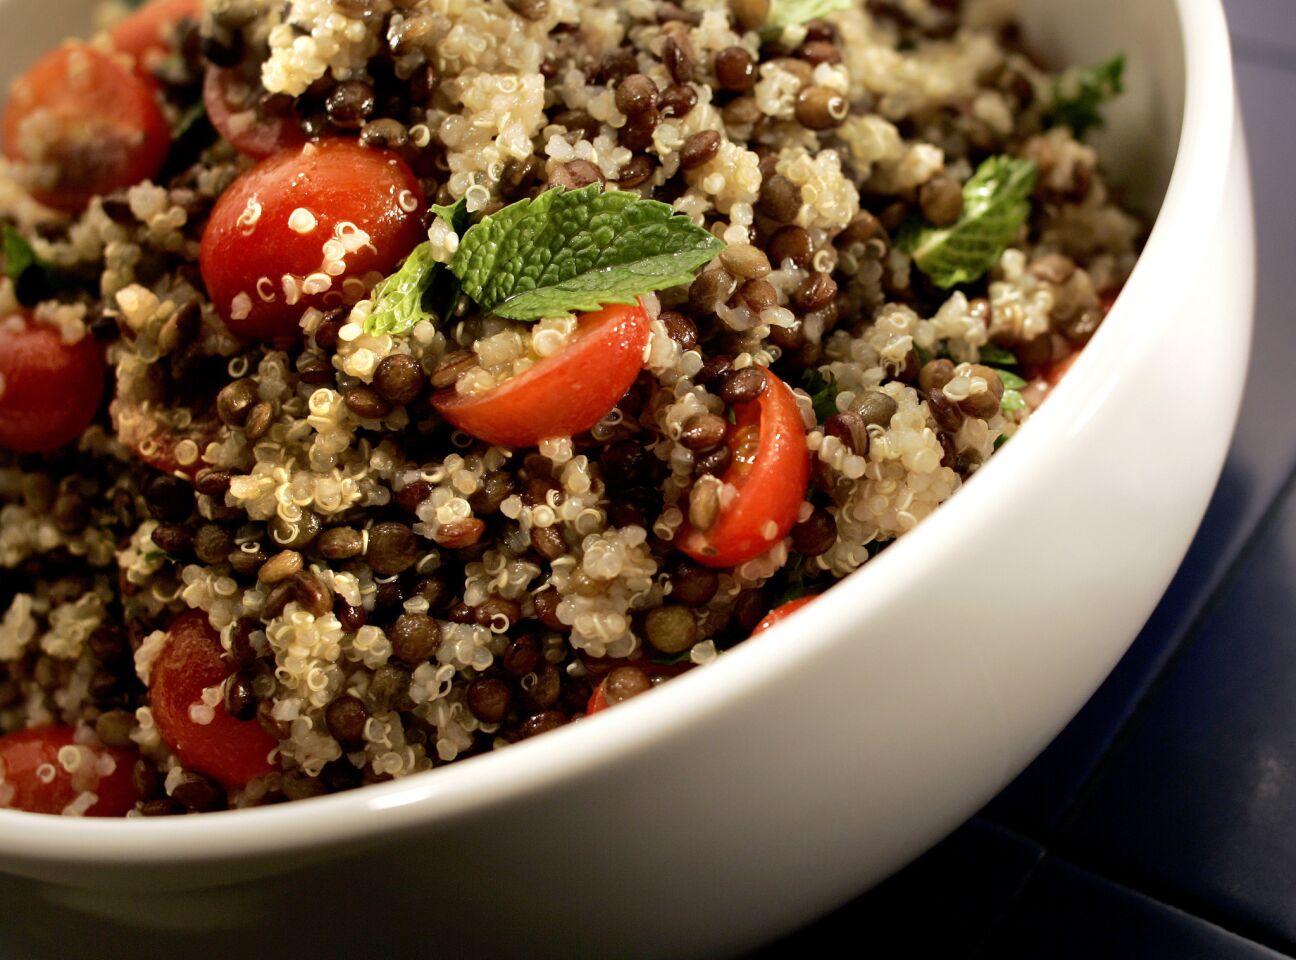 Quinoa lentil salad with tomatoes